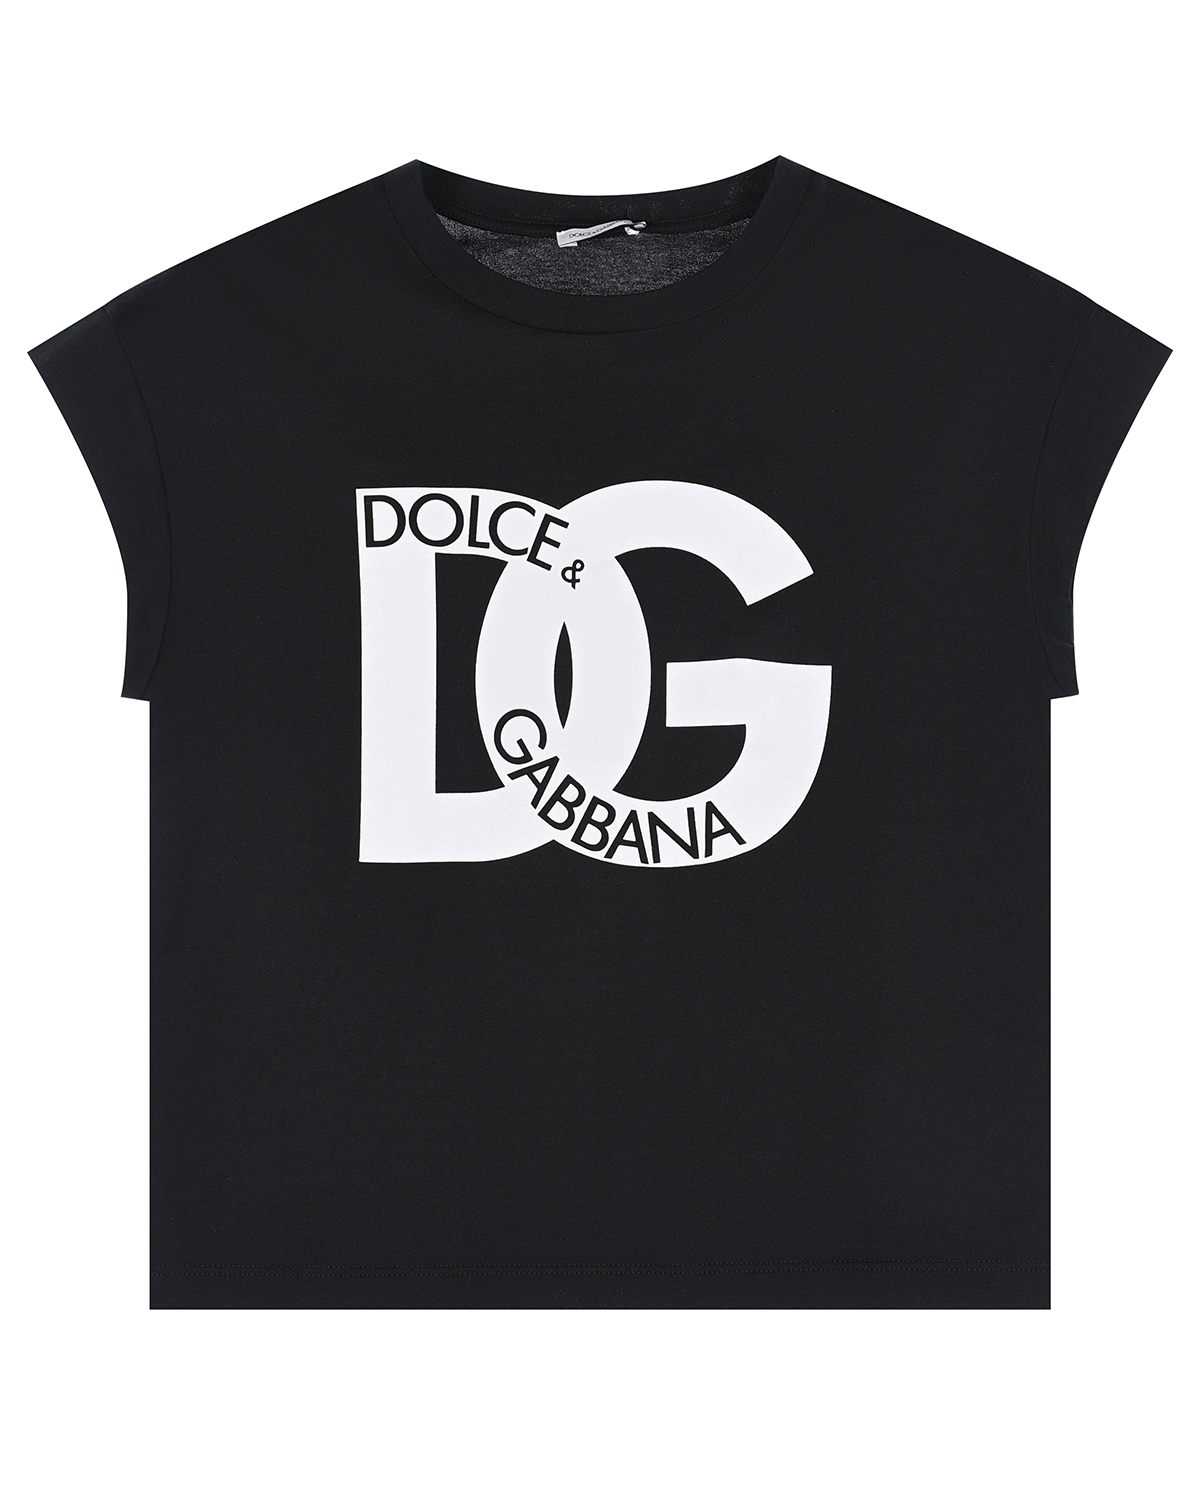 Черная футболка с крупным белым лого Dolce&Gabbana футболка dolce